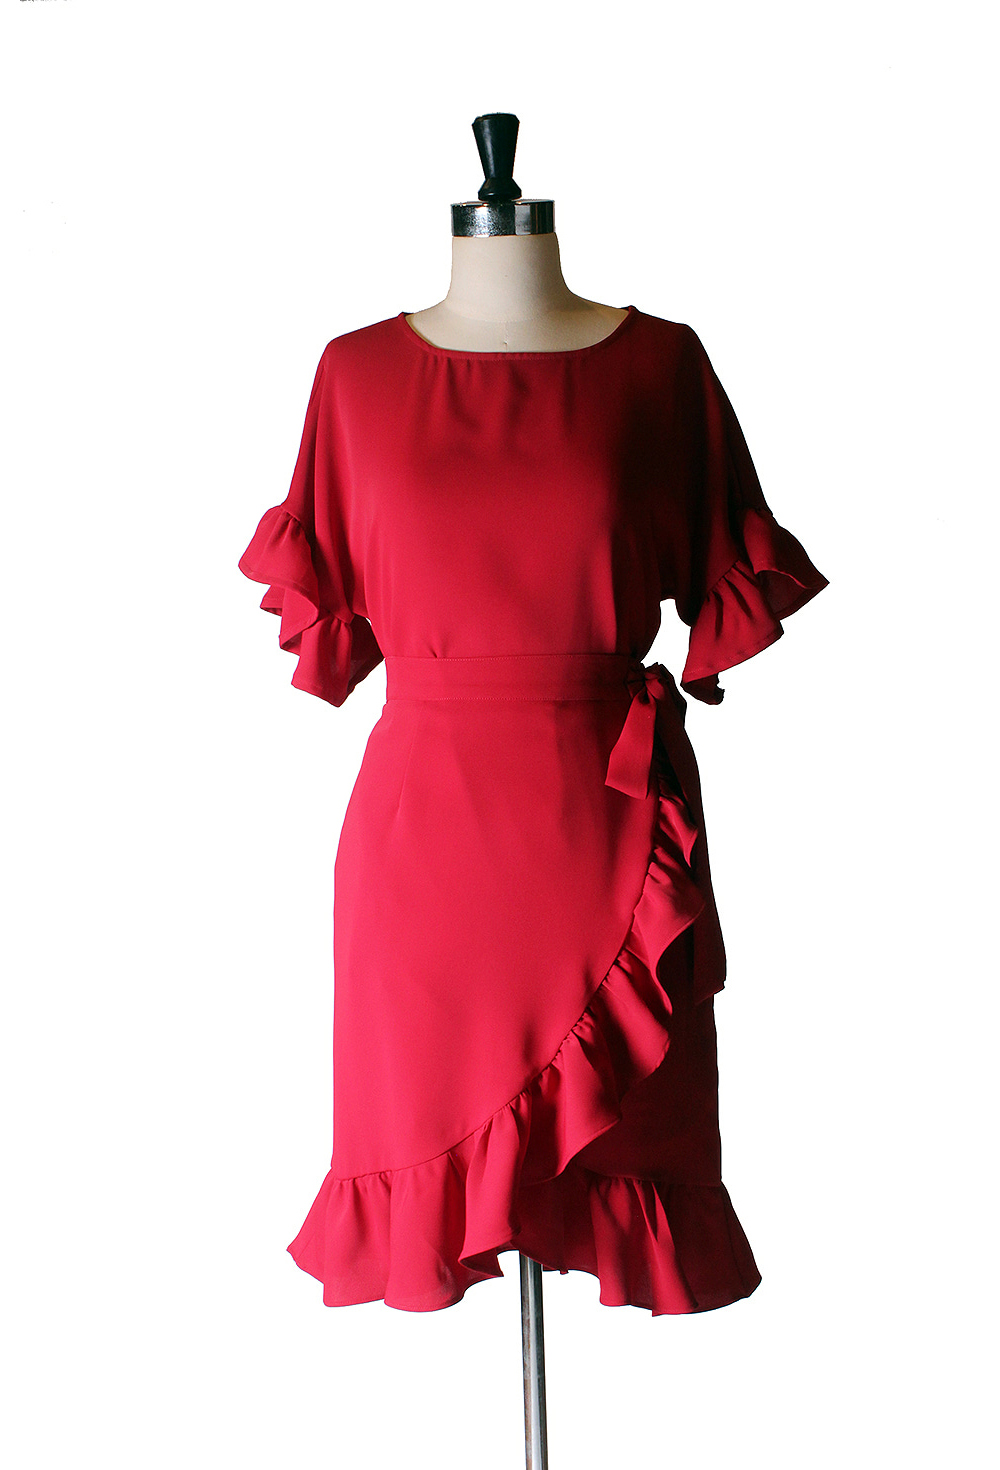 mini skirt red color image-S1L53